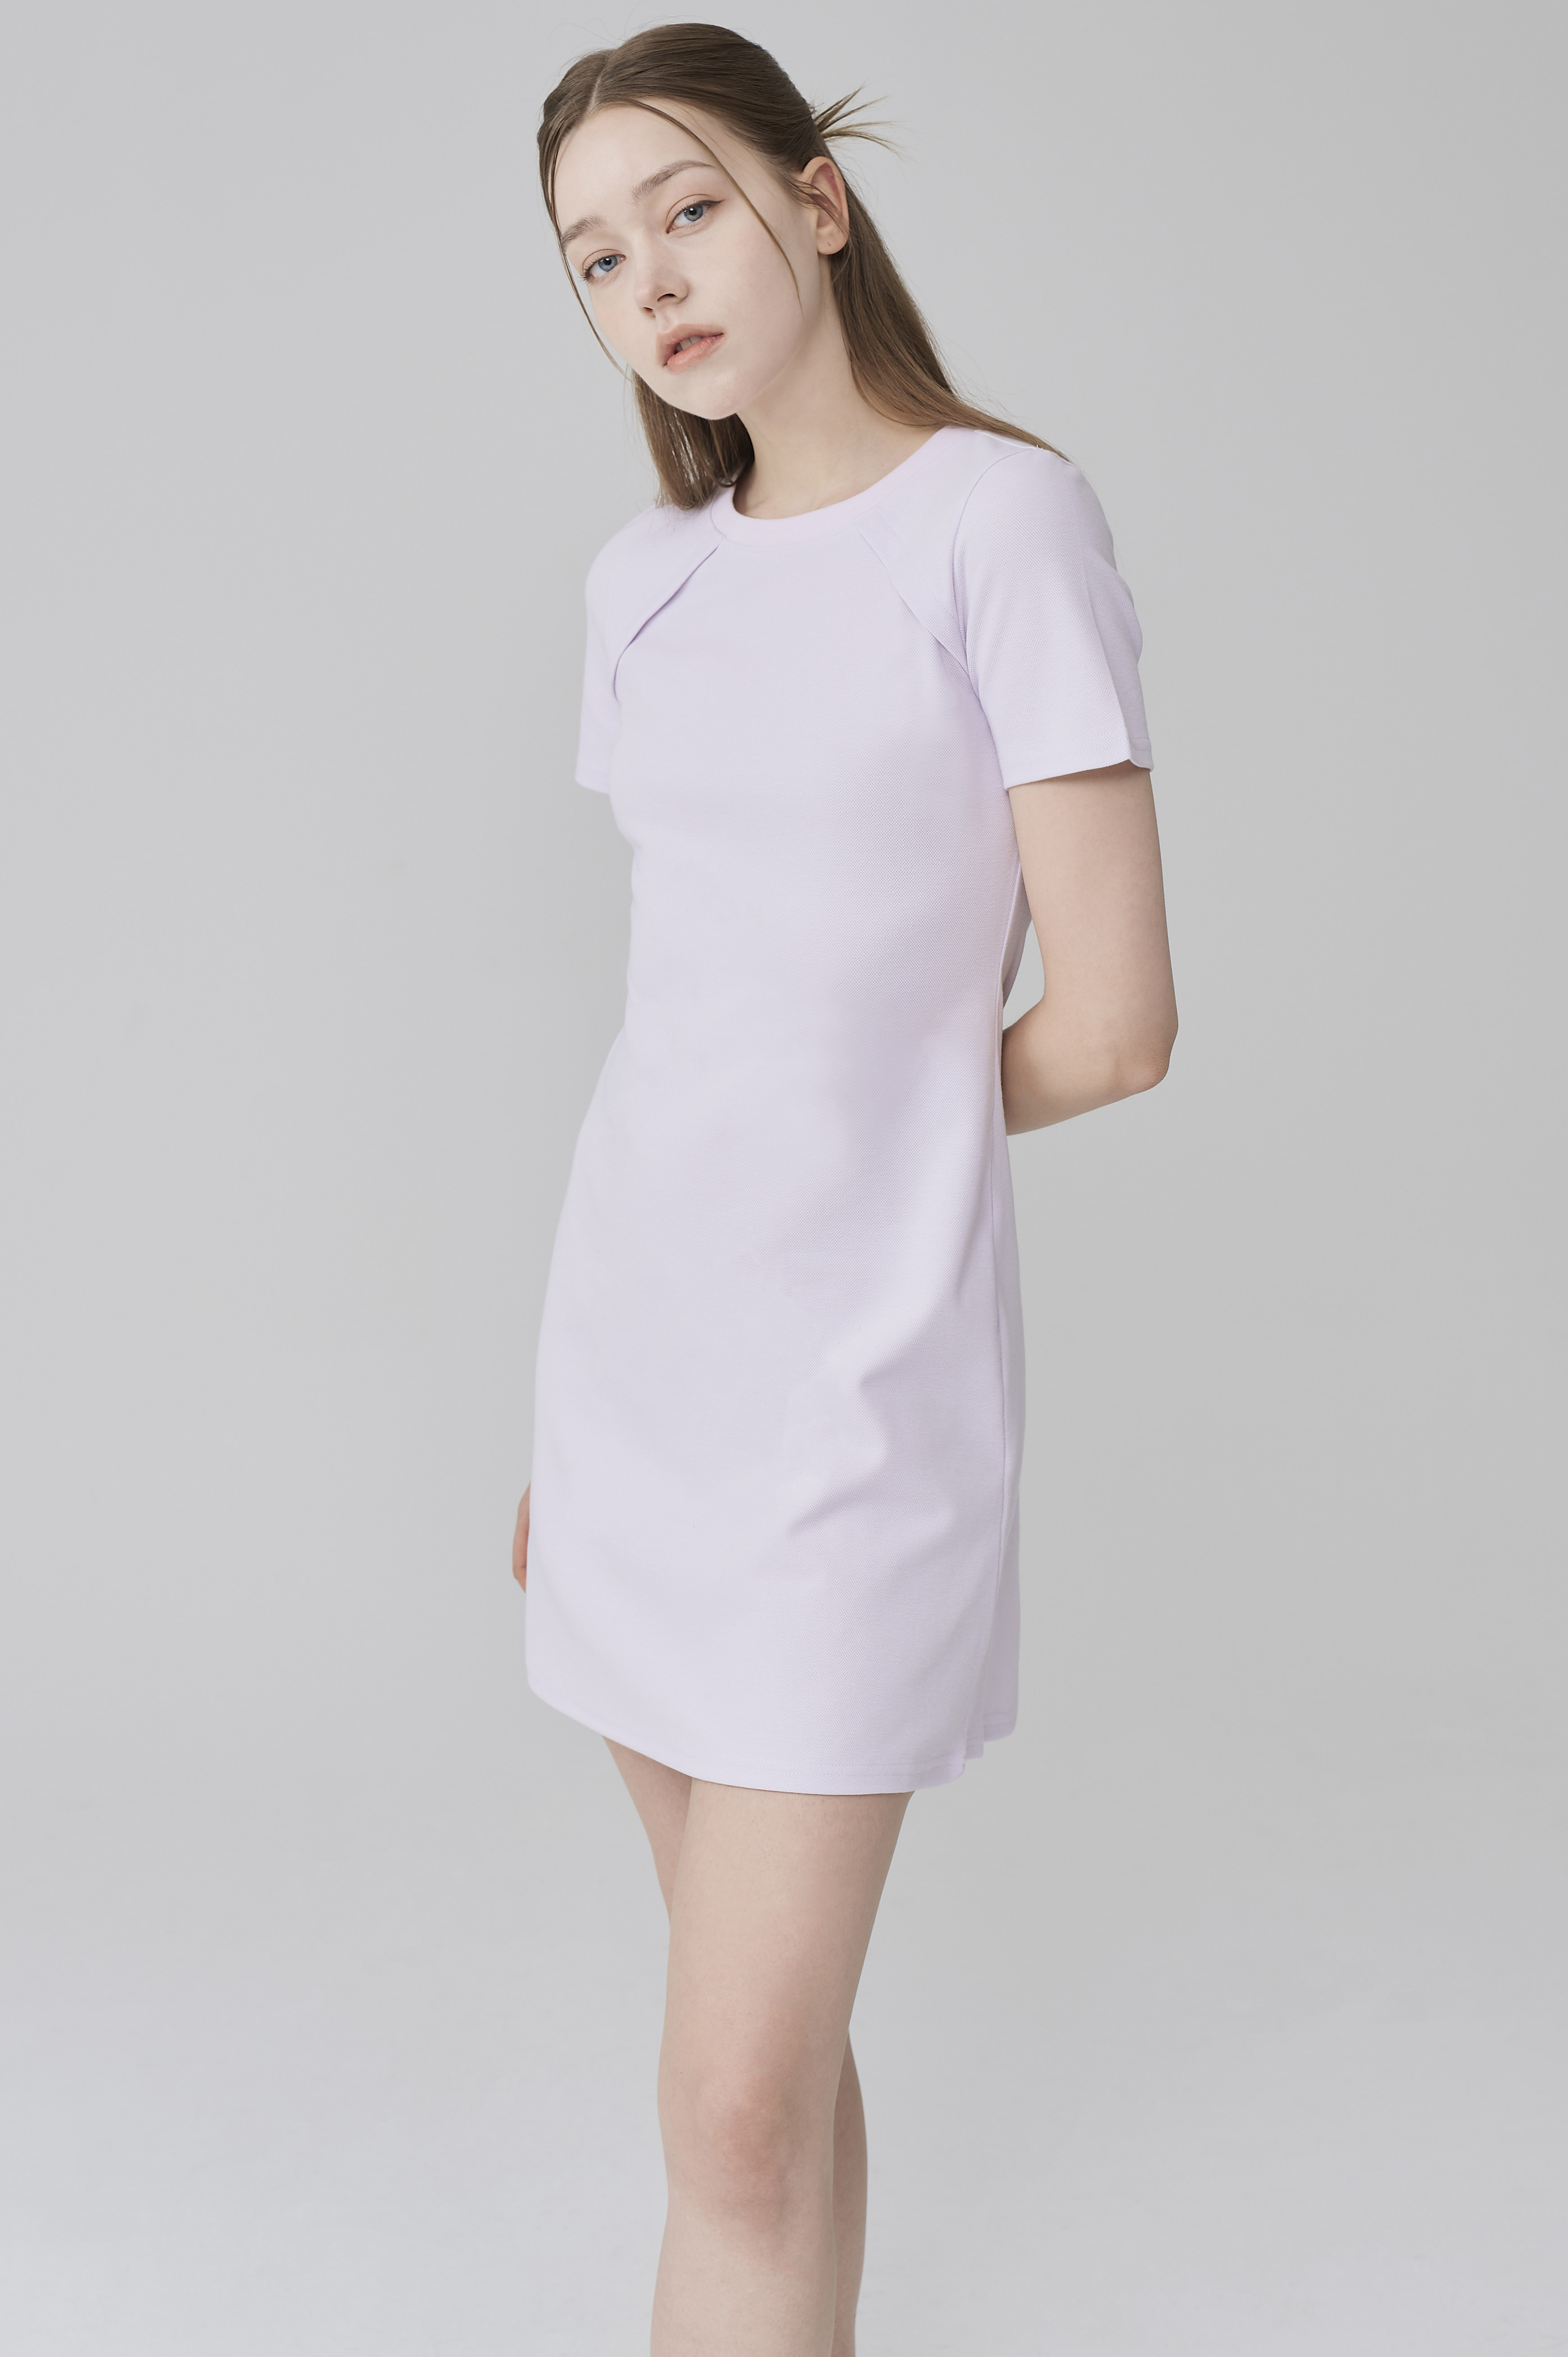 A-LINE SHORT SLEEVED PK DRESS-light purple, 혜영킴, HYEYEONG KIM designer brand